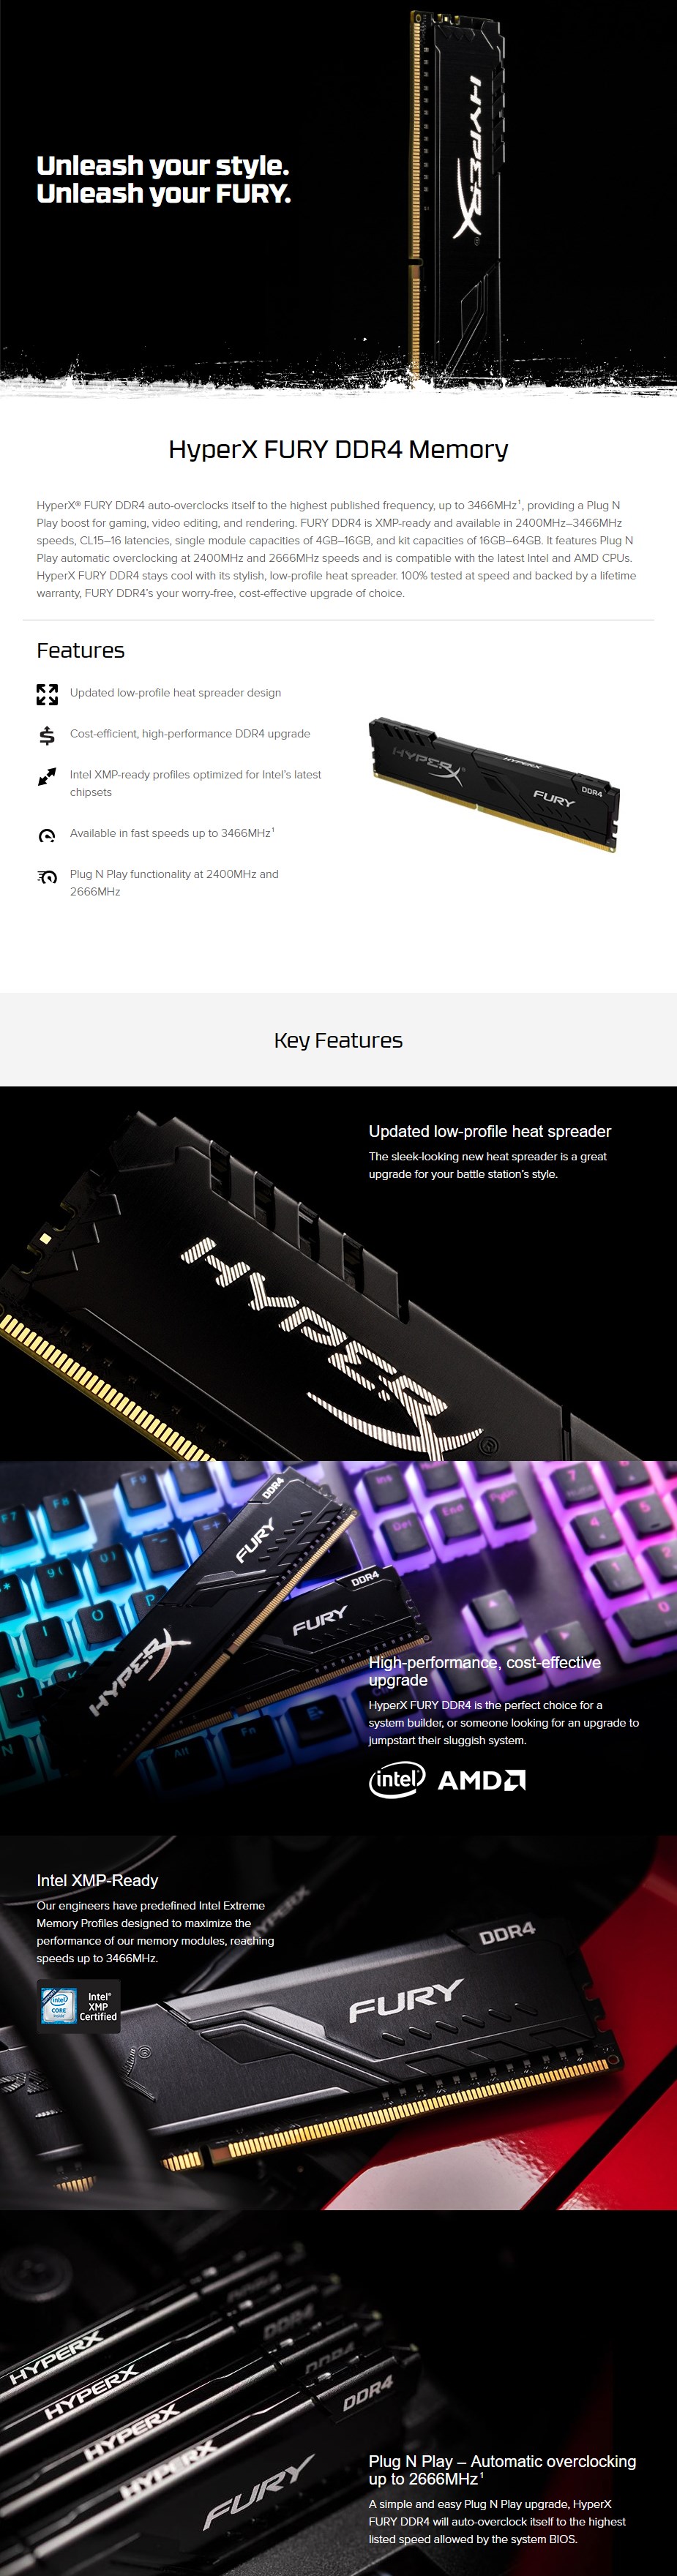 Kingston HyperX FURY 16GB (2x 8GB) DDR4 2666MHz Memory Black - Overview 1